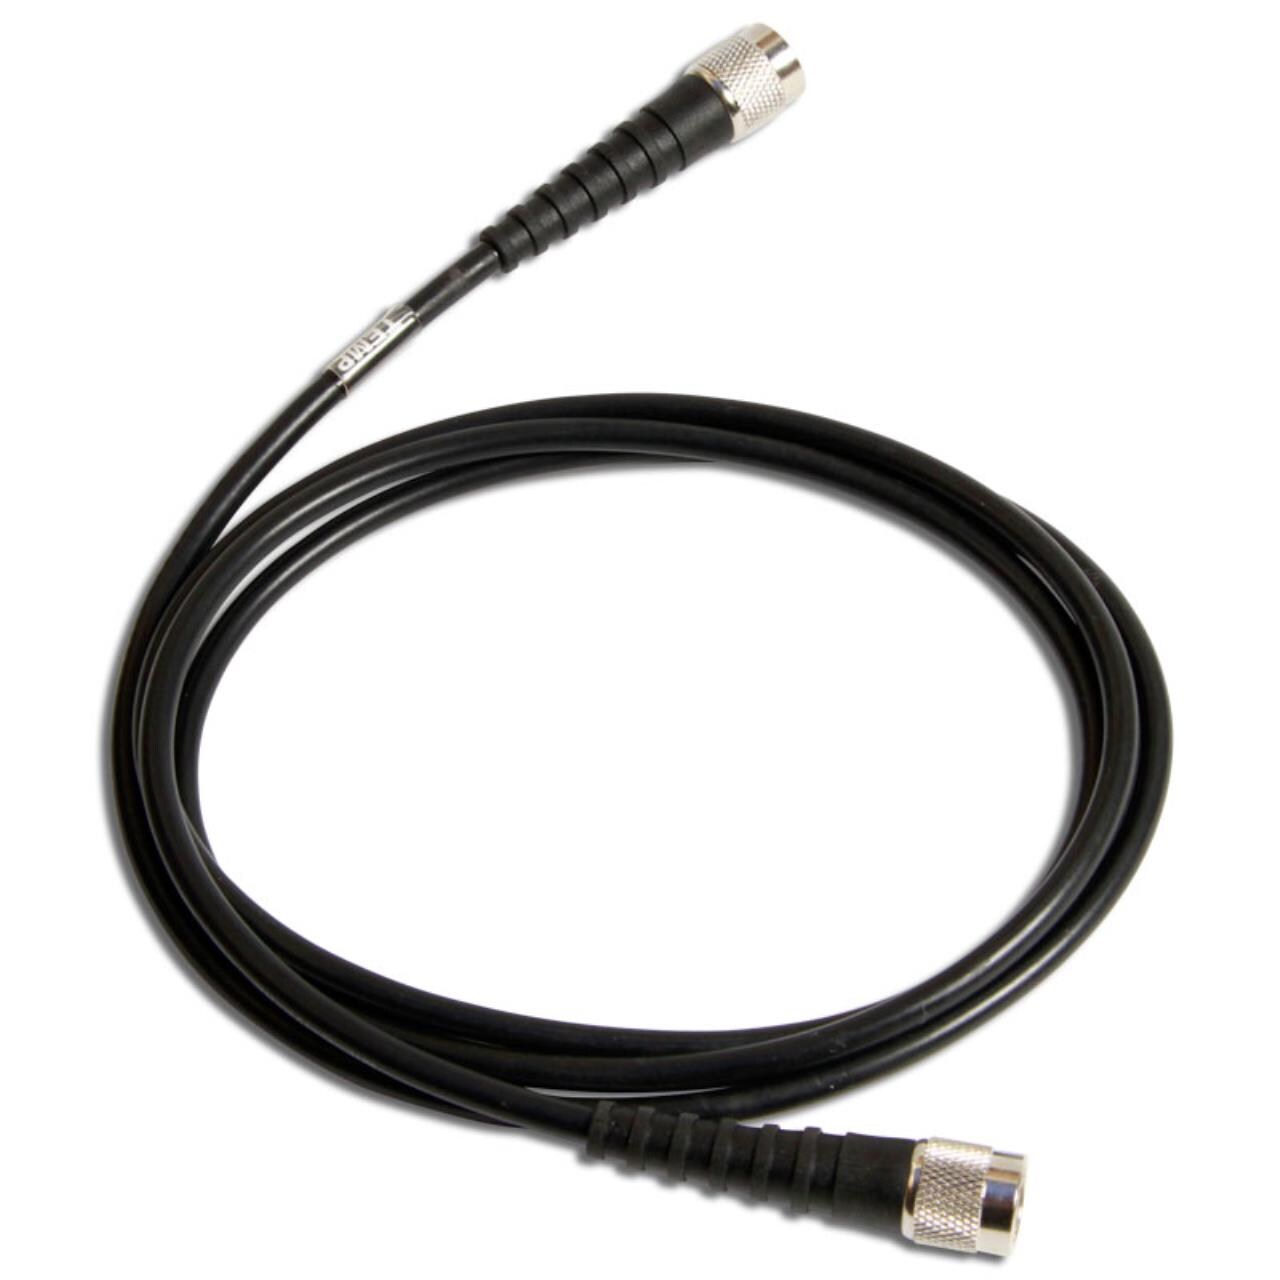 Cable for temperature sensor UniGo